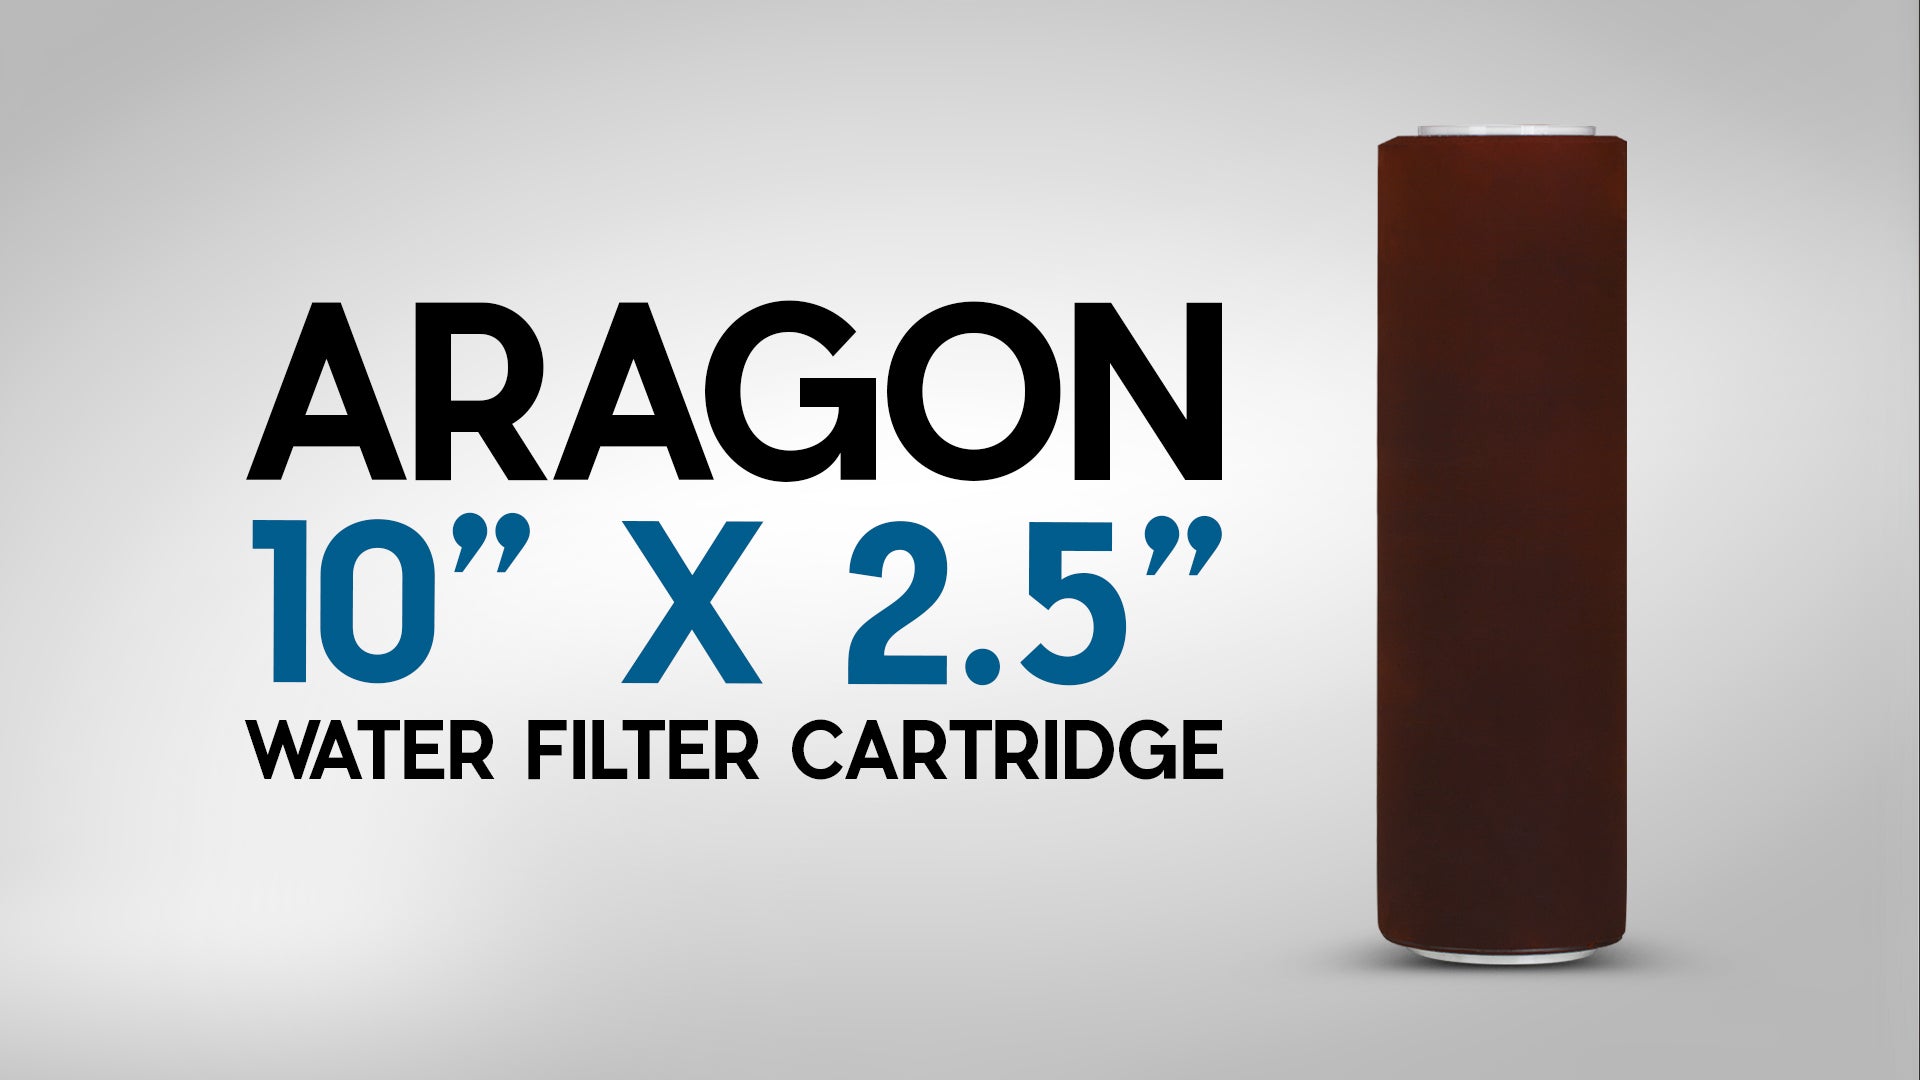 Aragon Water Filter Replacement Cartridge 10" x 2.5" - Product Spotlight